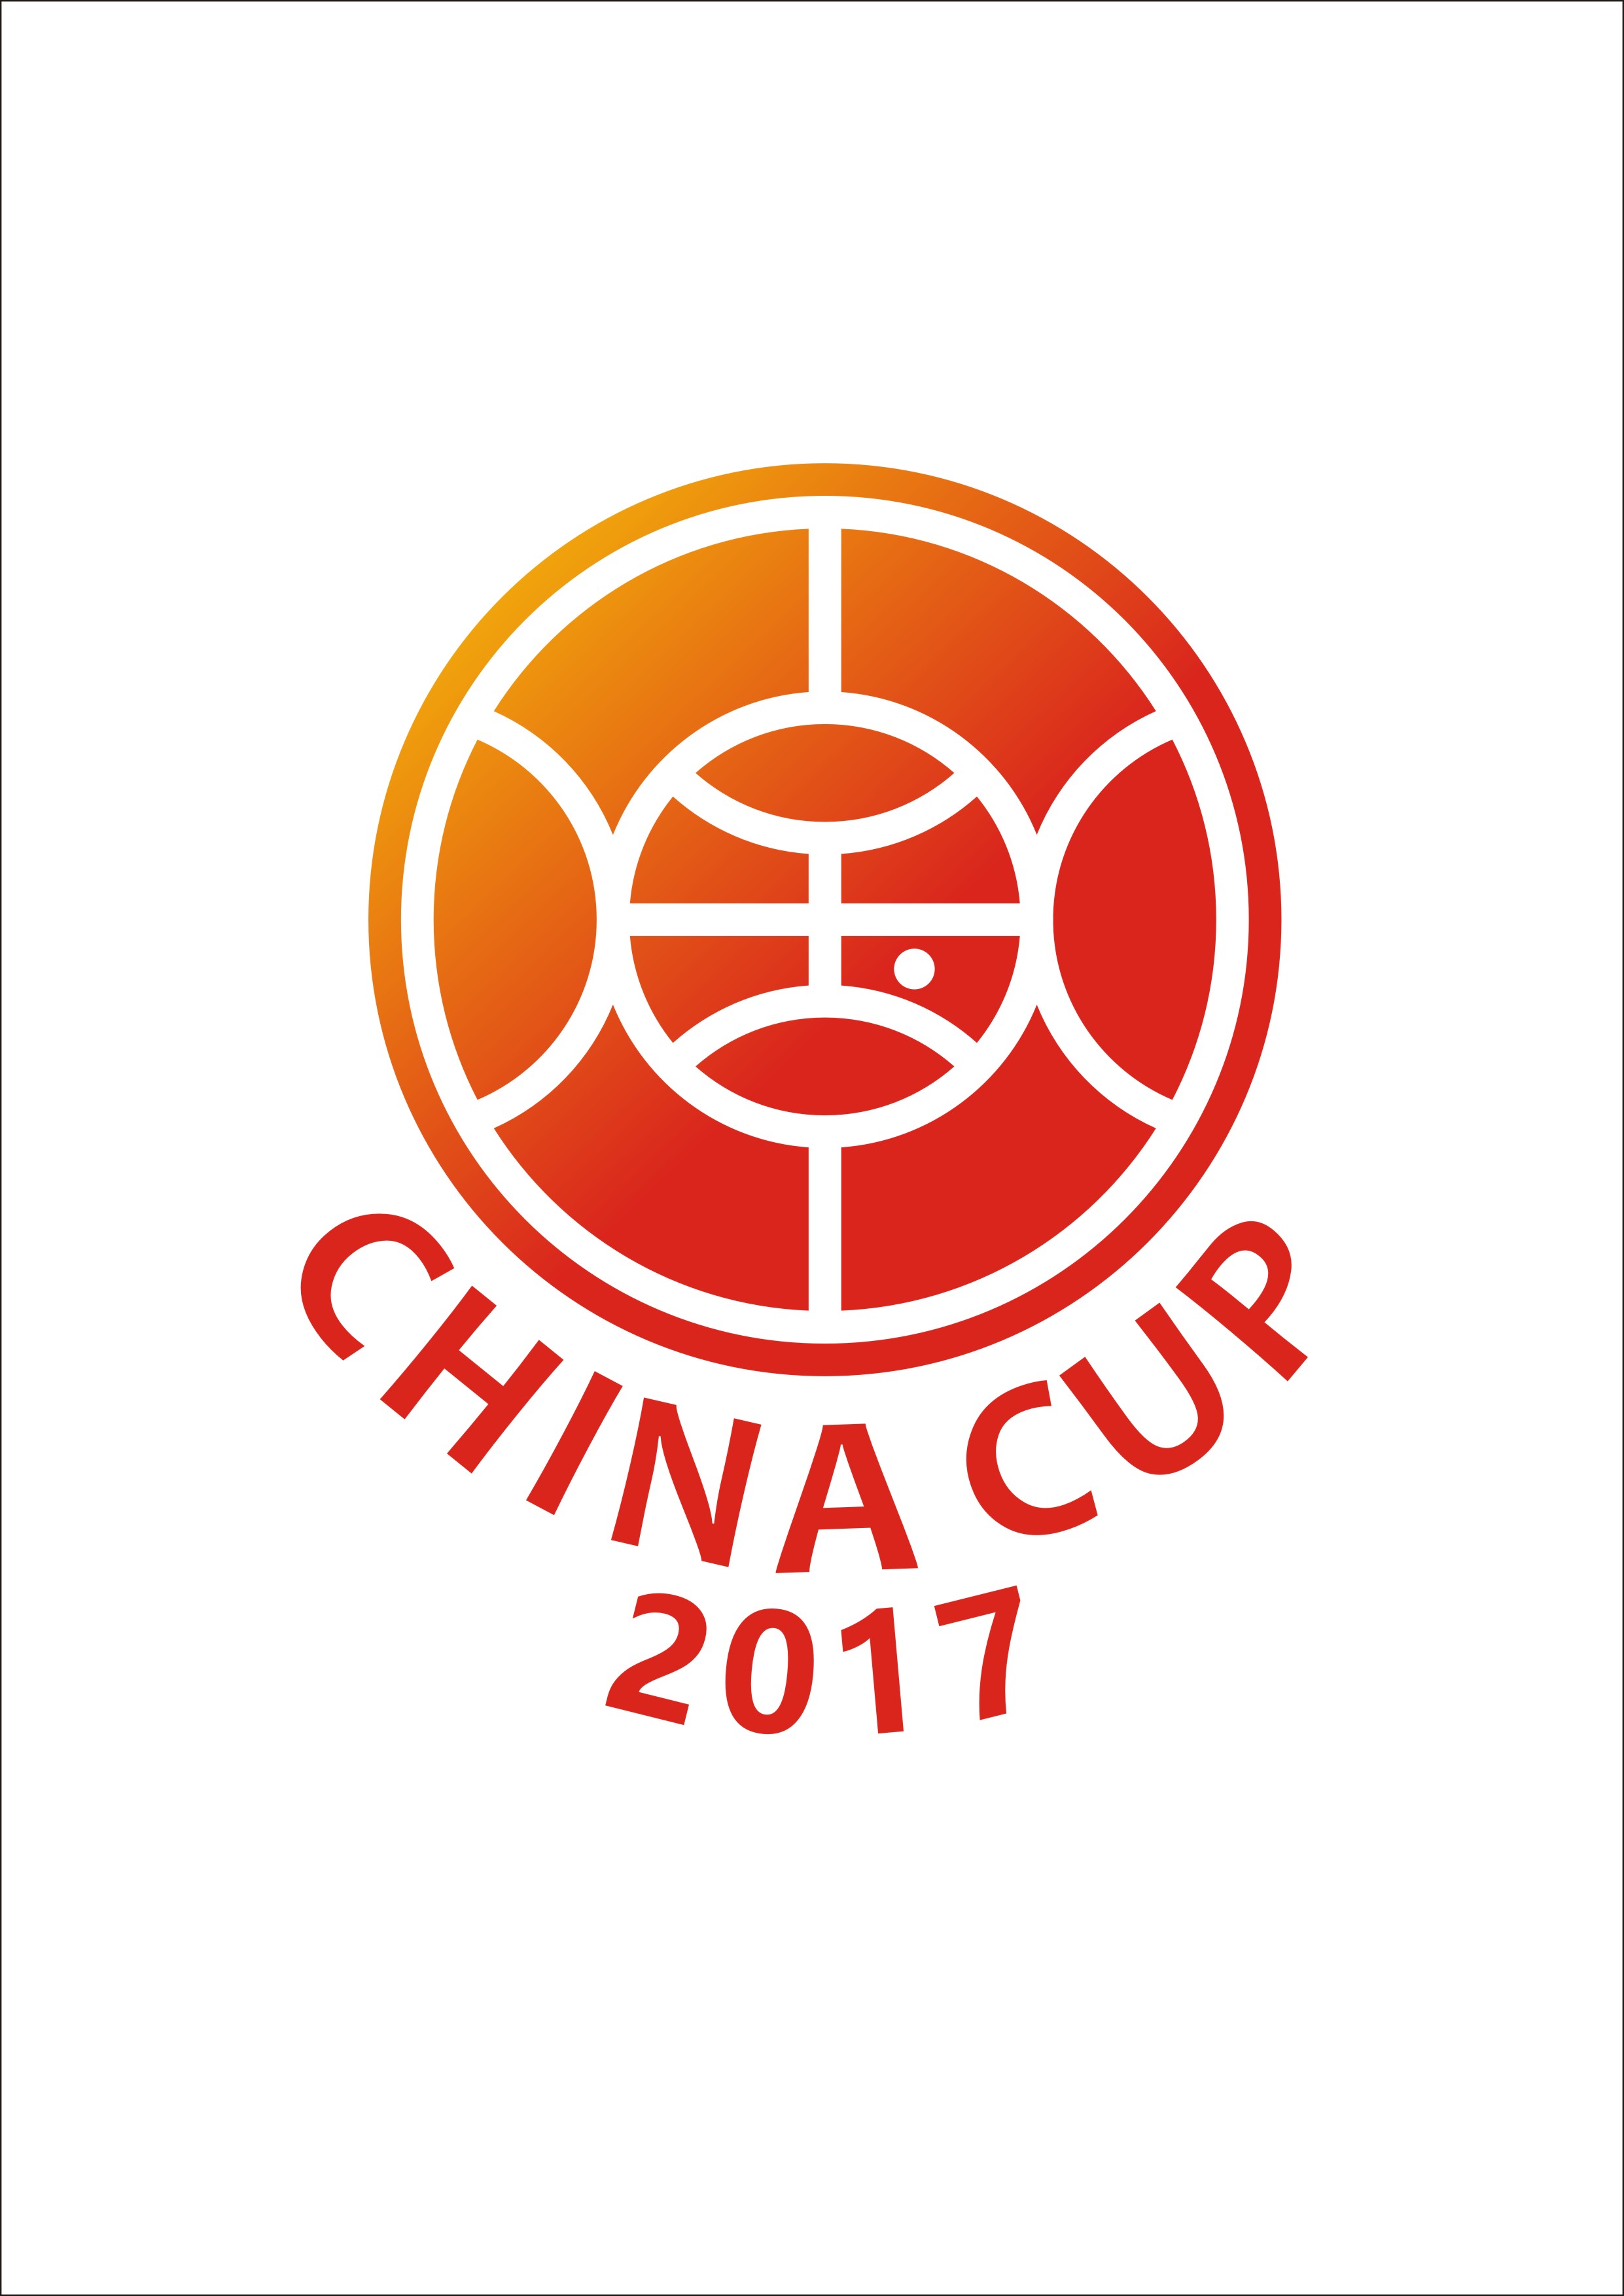 logo以足球圆形为创意主体,将汉字"中国","